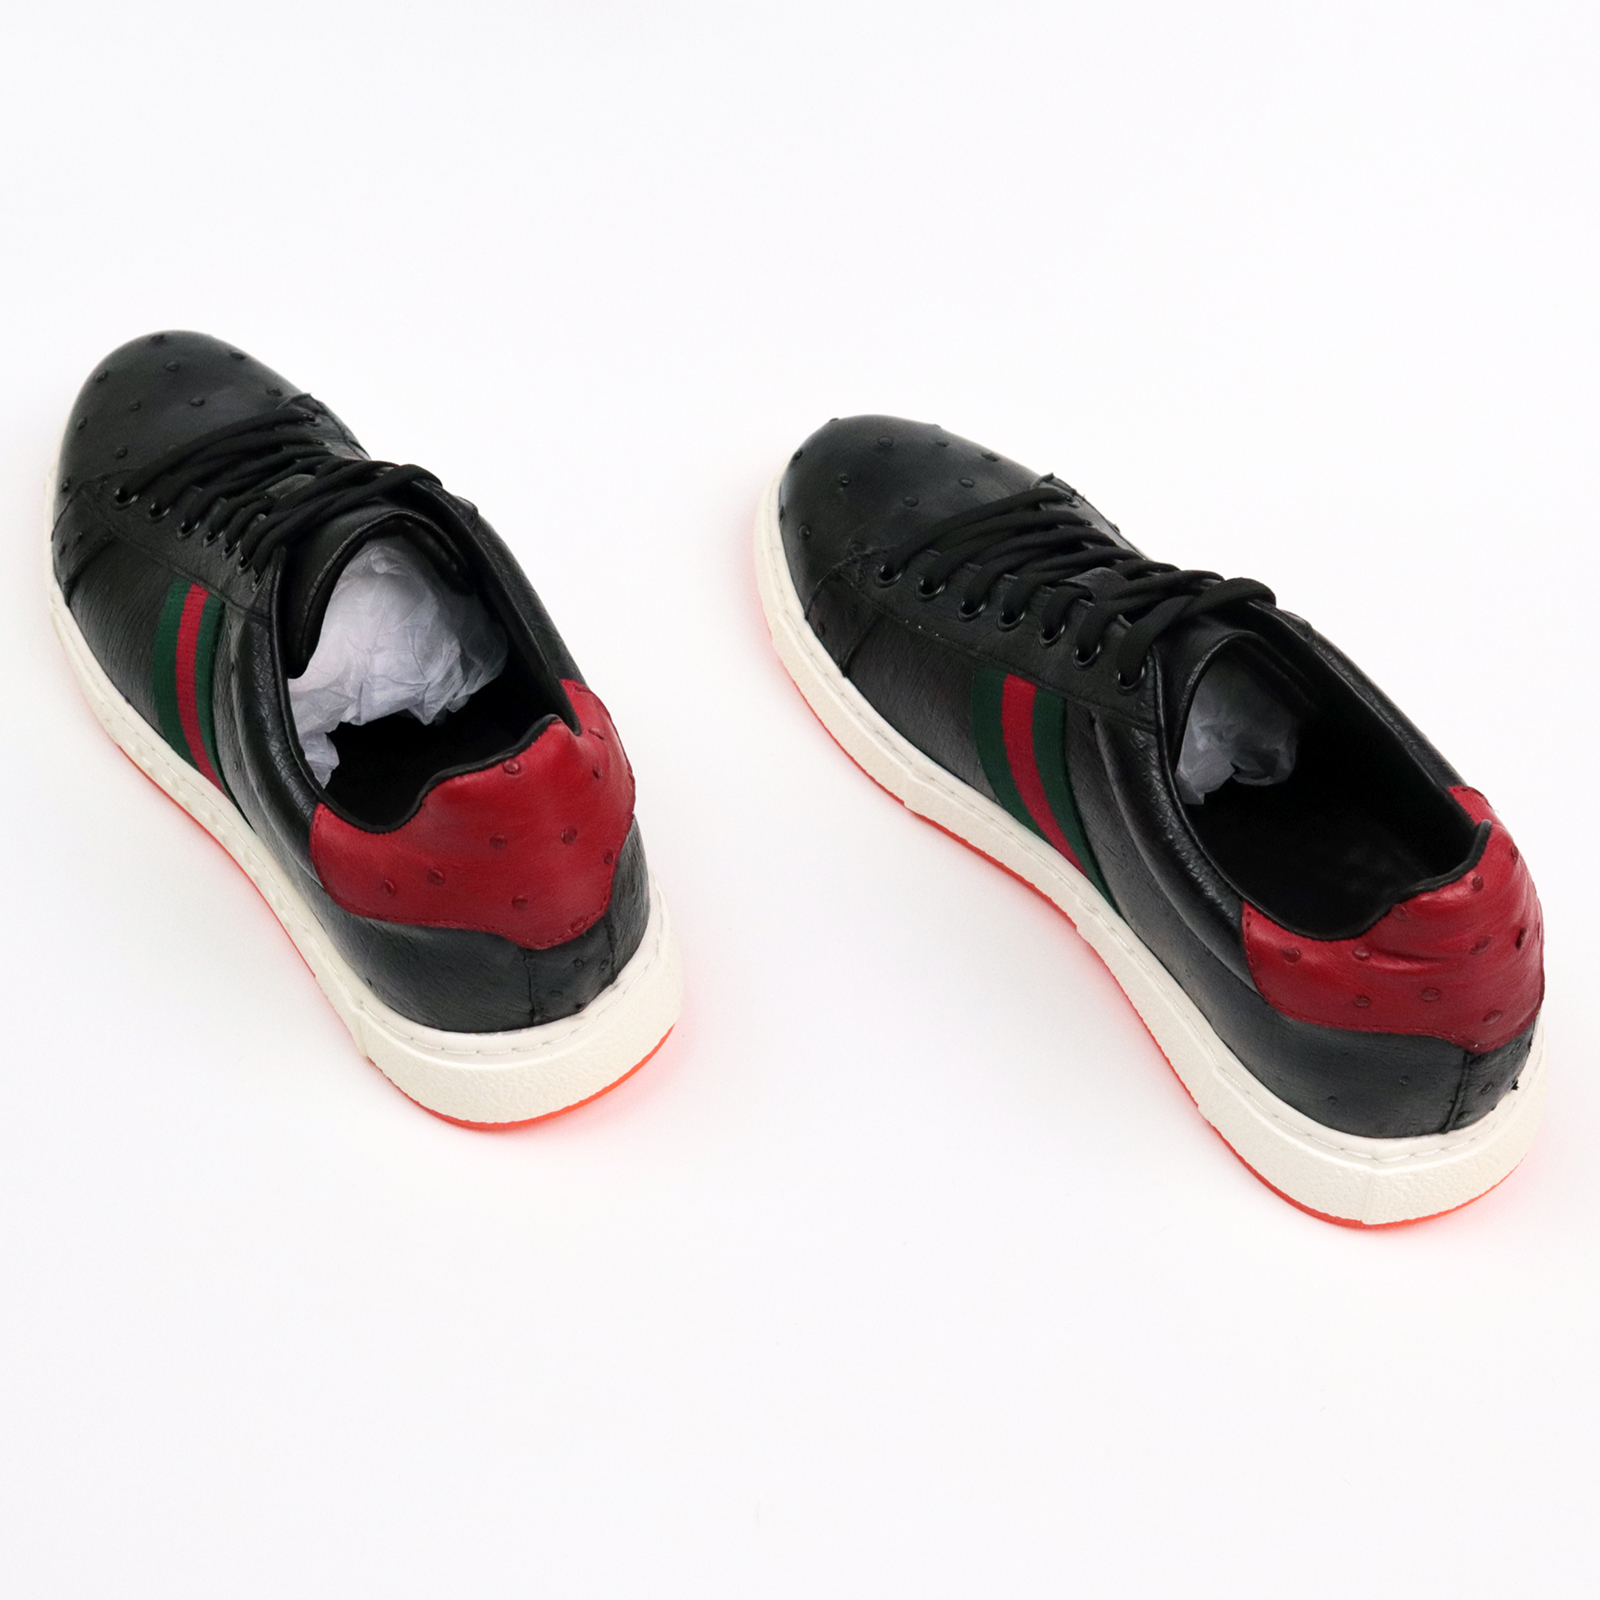 Sneaker Ostrich Leather Sporty Basic design Black Shoes for Men